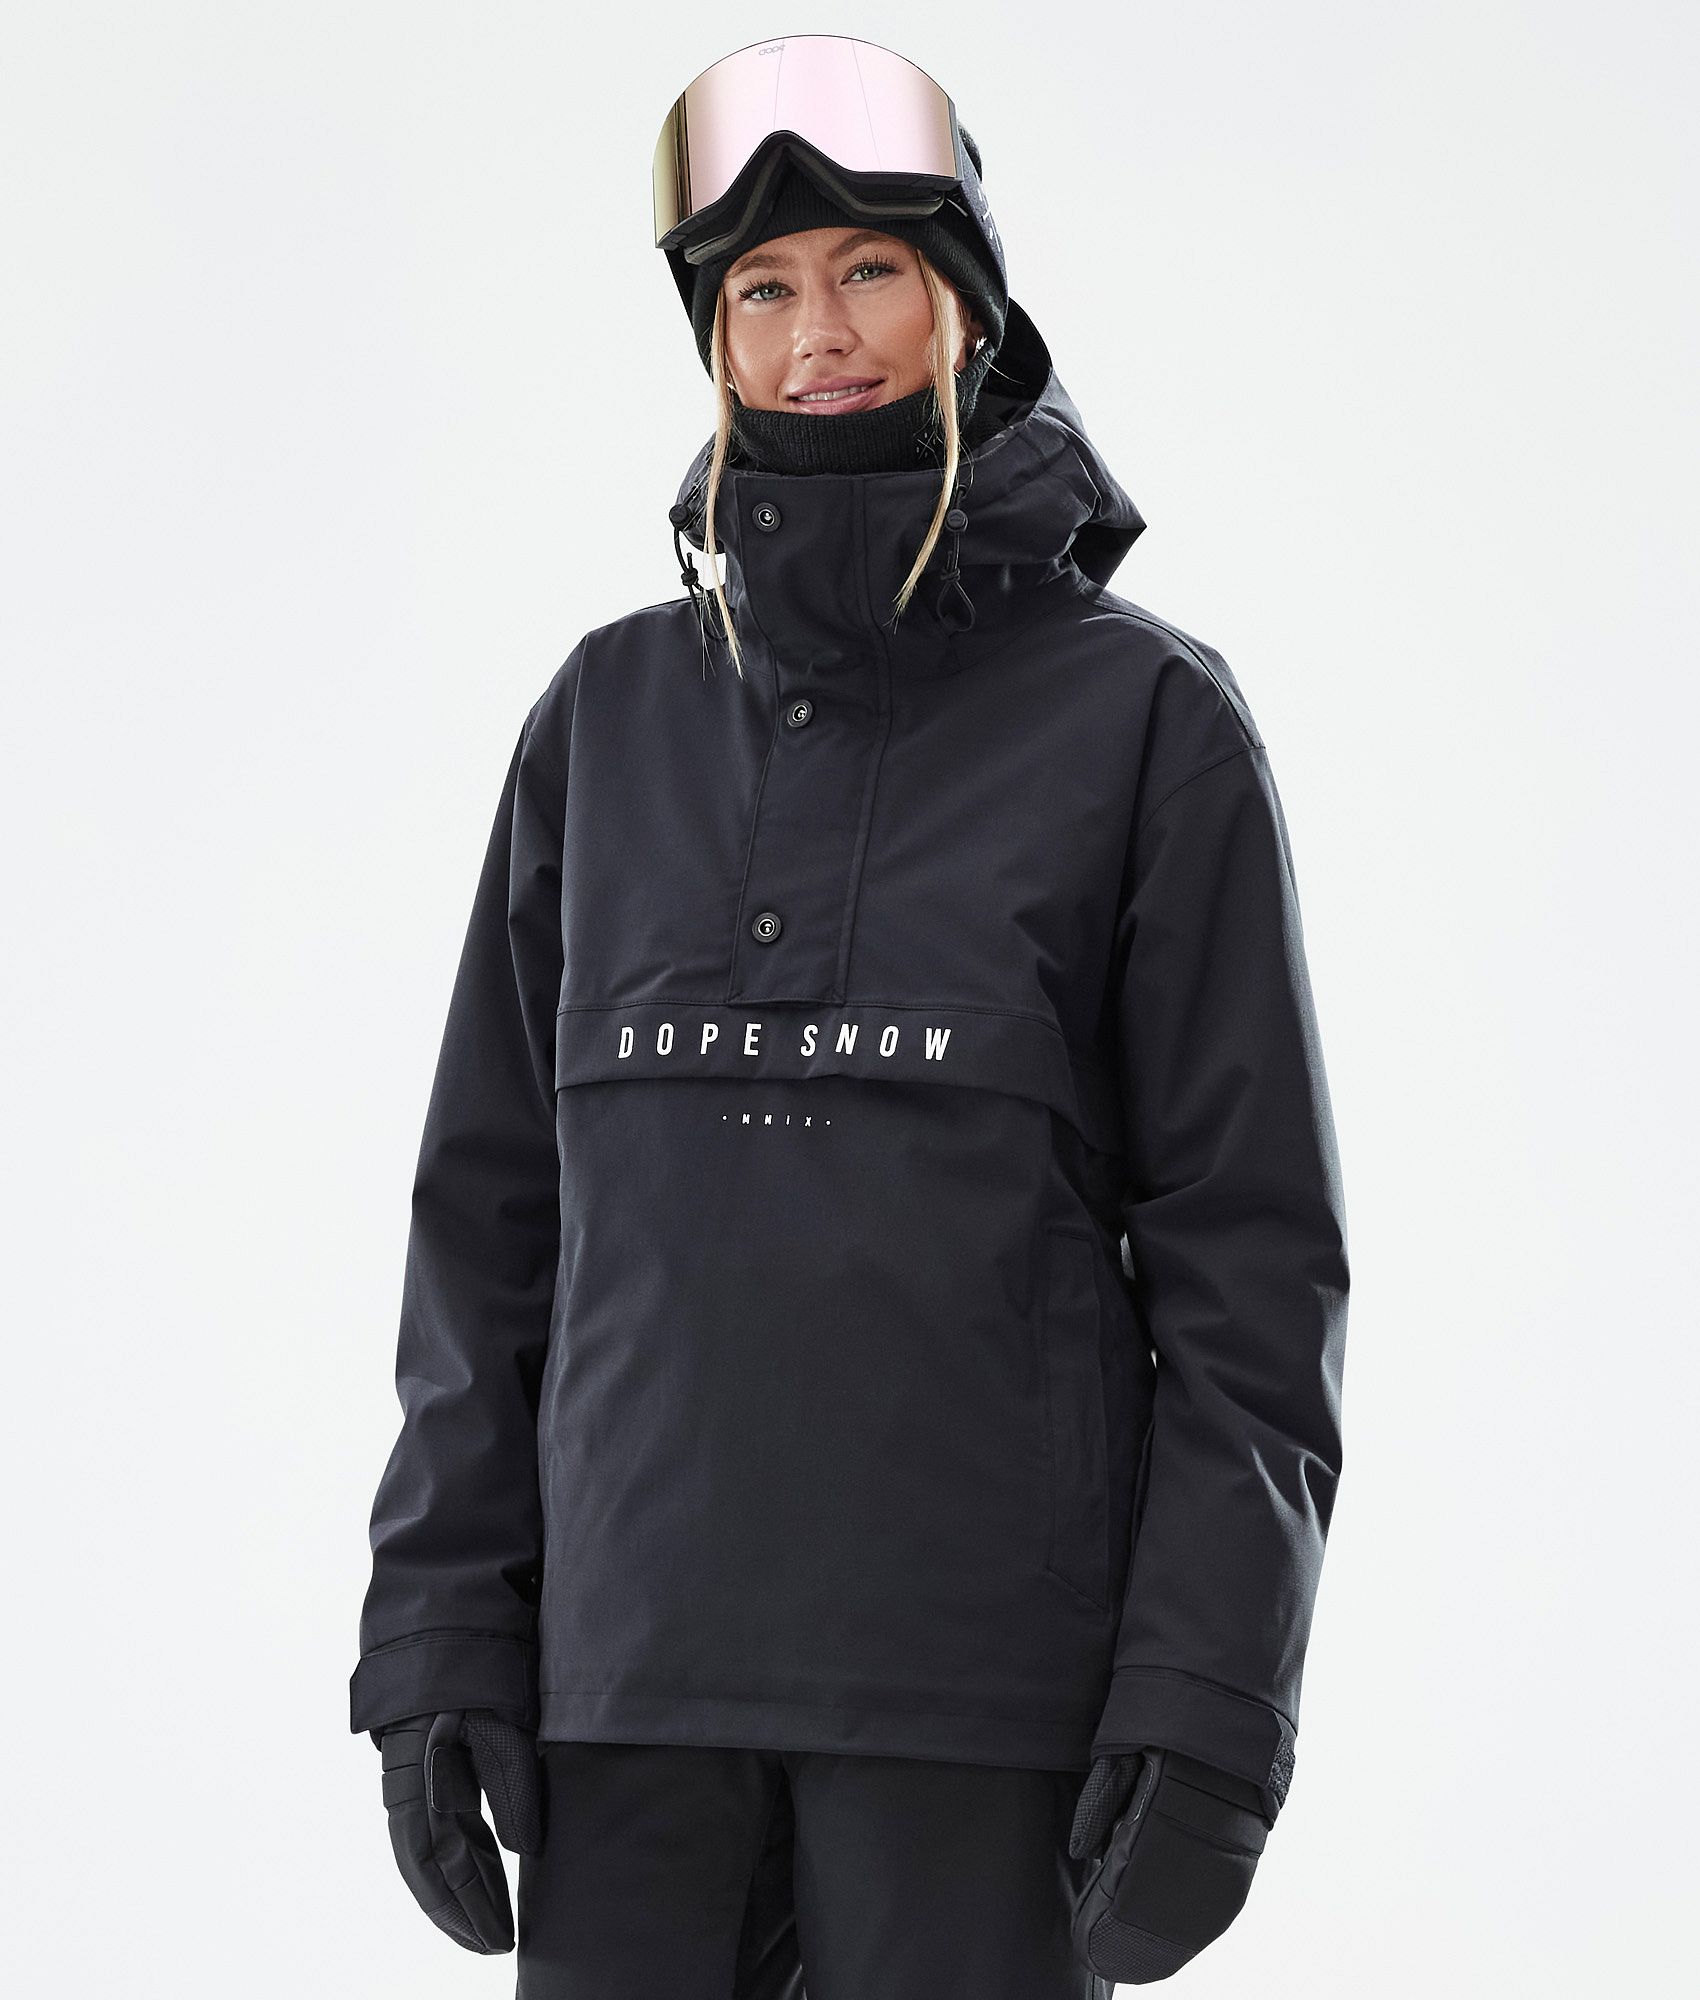 Dope snowboard jacket - Coats & jackets